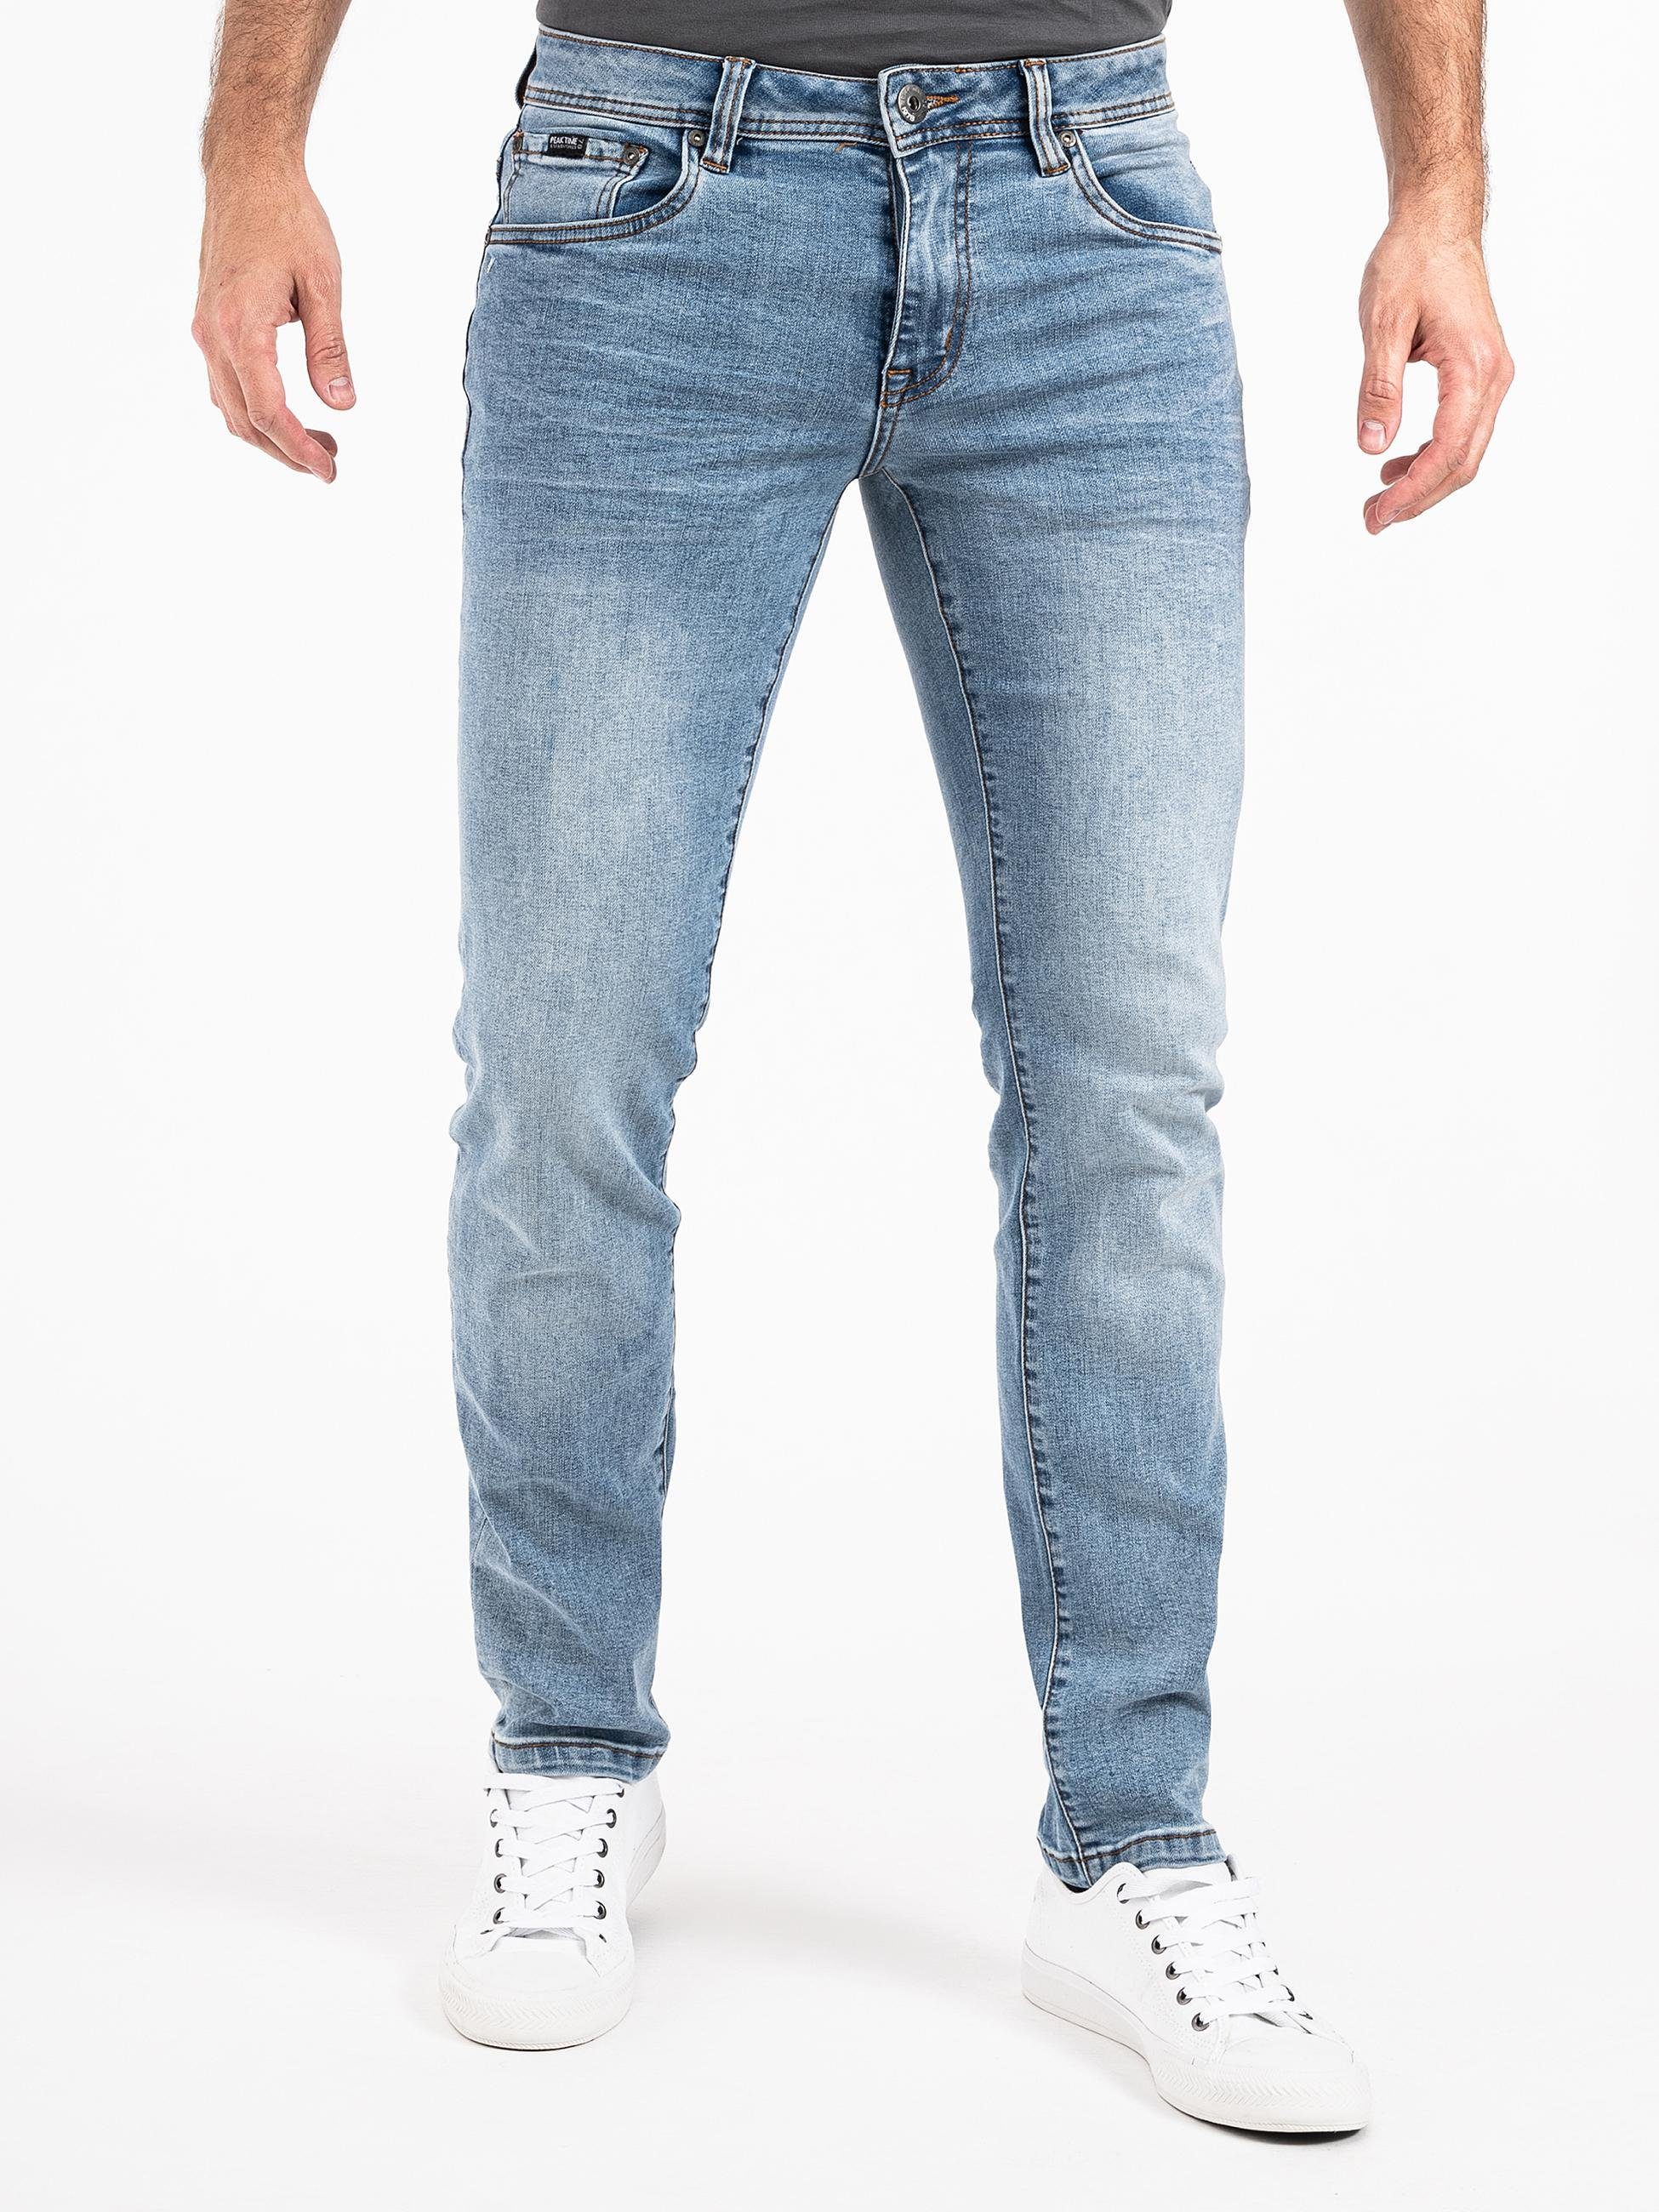 PEAK TIME Slim-fit-Jeans Mailand Herren Jeans mit super hohem Stretch-Anteil hellblau